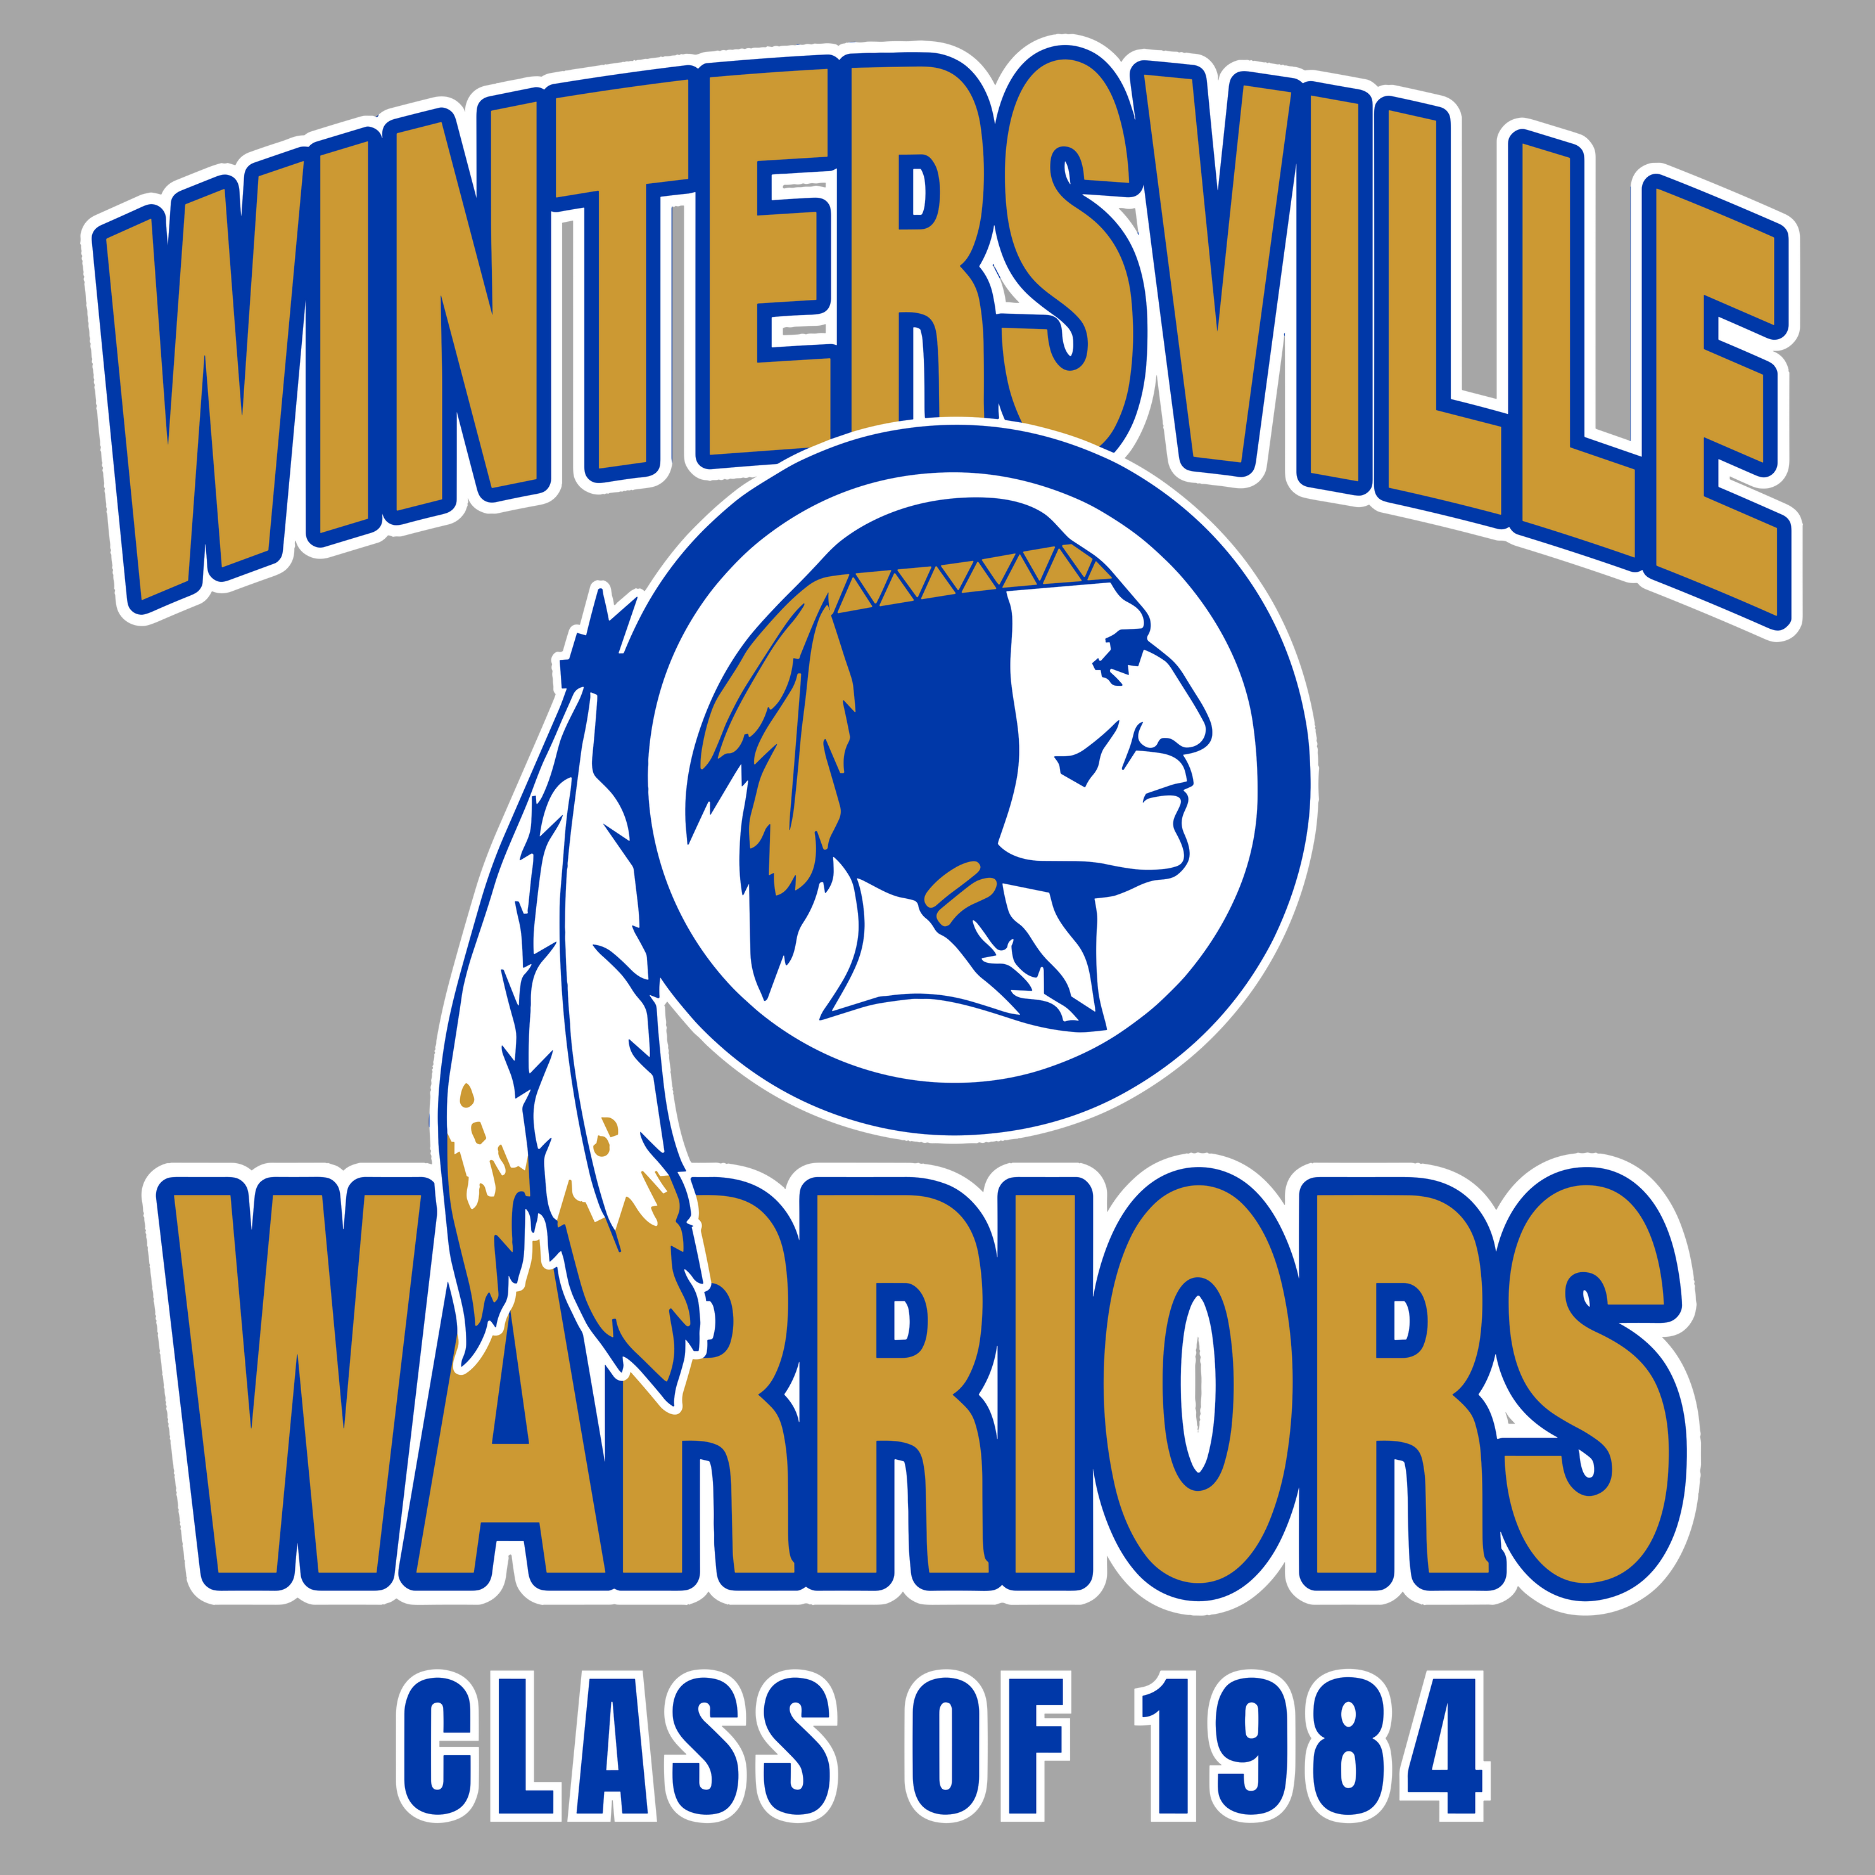 Wintersville Class of 1984 logo